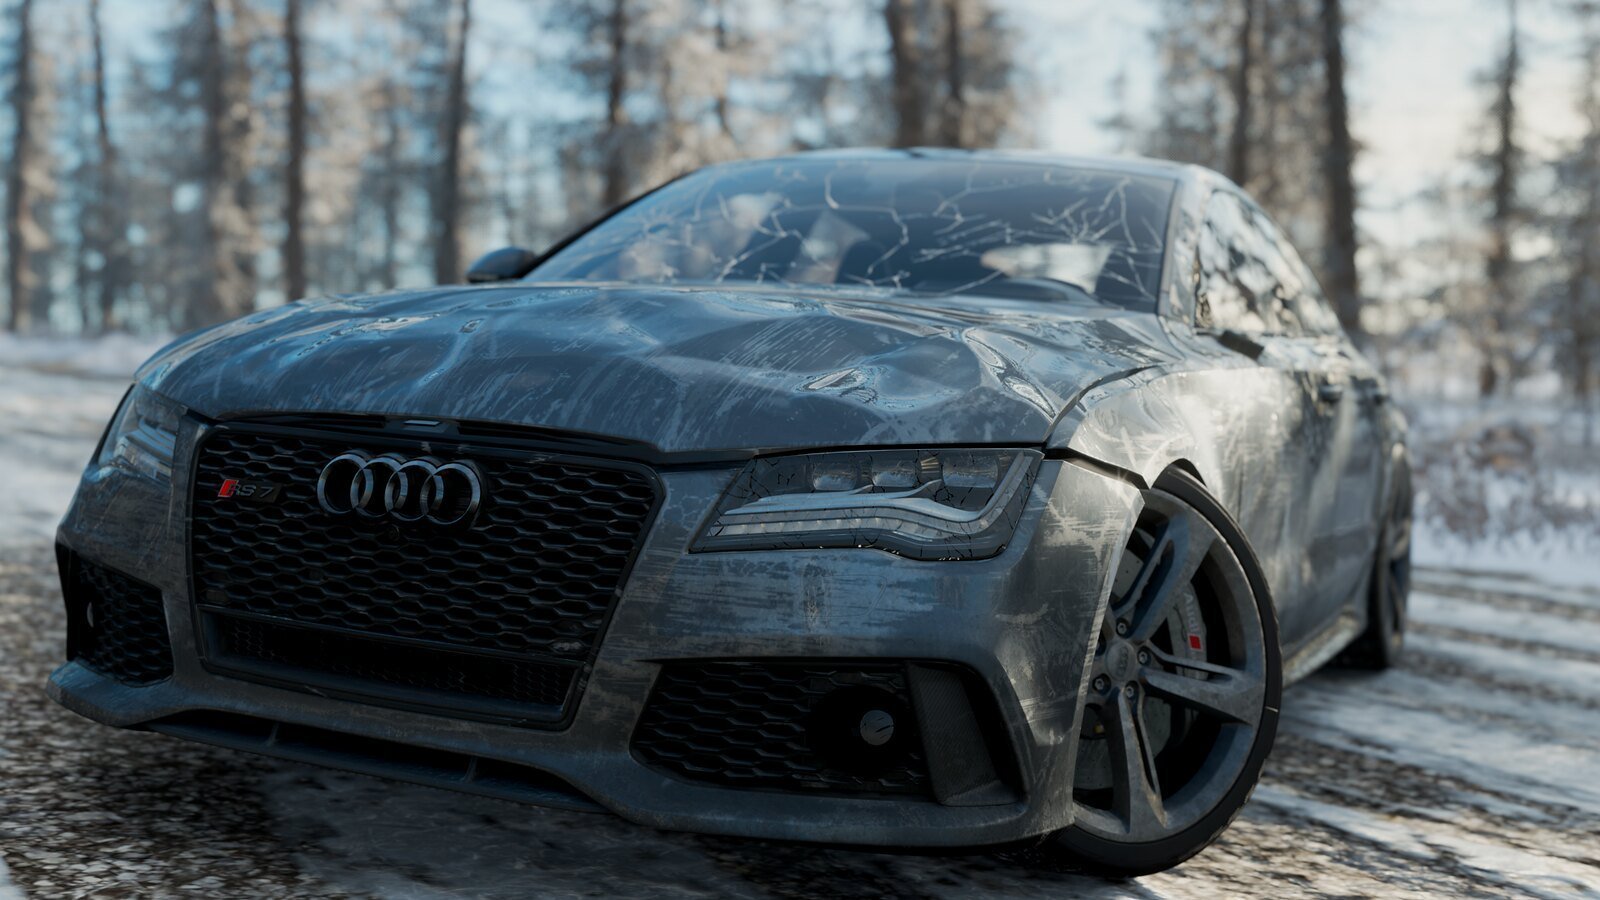 Audi rs7 2020. Audi rs7 Widebody. Audi RS 7 Carbon. Ауди rs7 зима. Обои ауди на айфон